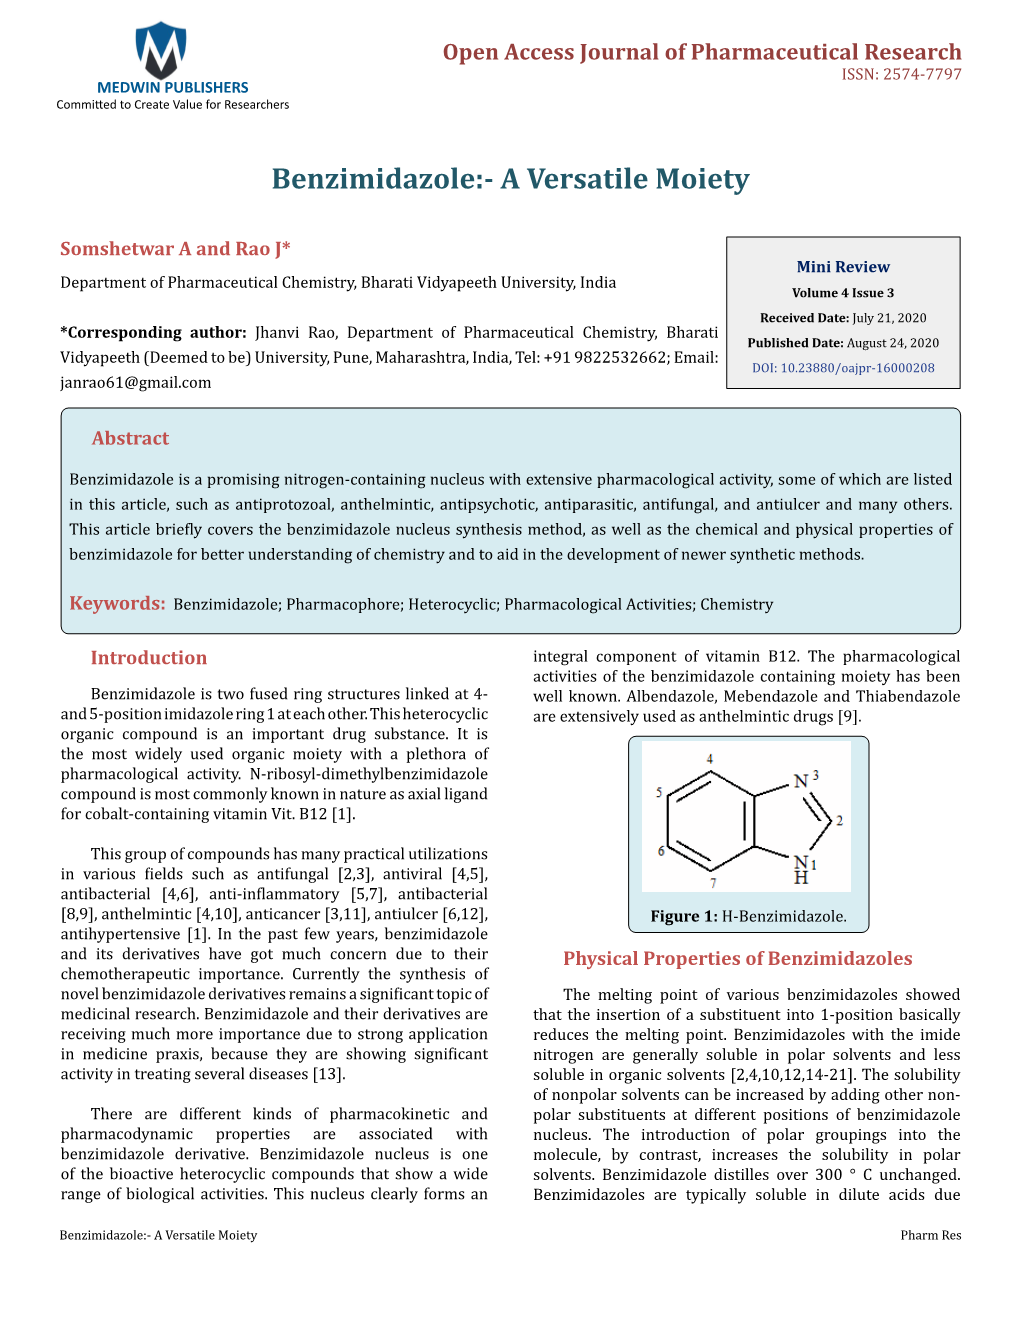 Benzimidazole:- a Versatile Moiety